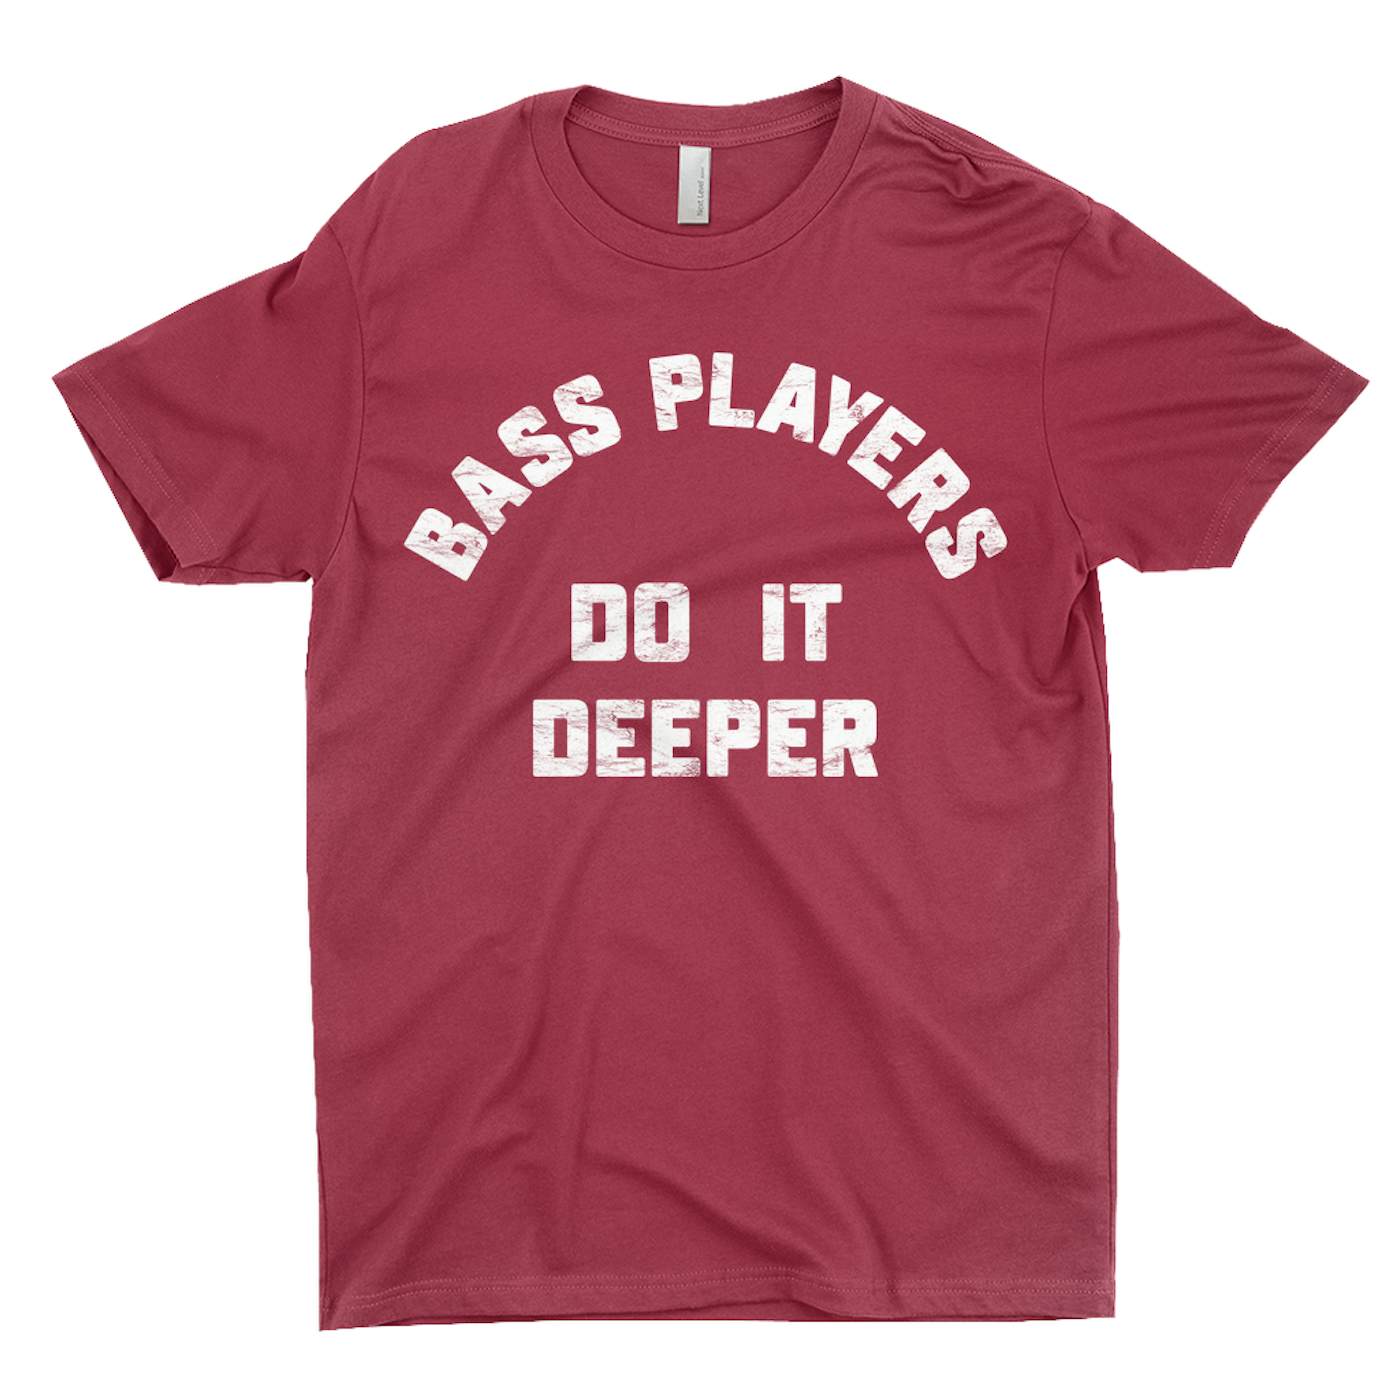 Def Leppard T-Shirt | Bass Players Do It Worn By Rick Savage Def Leppard Shirt